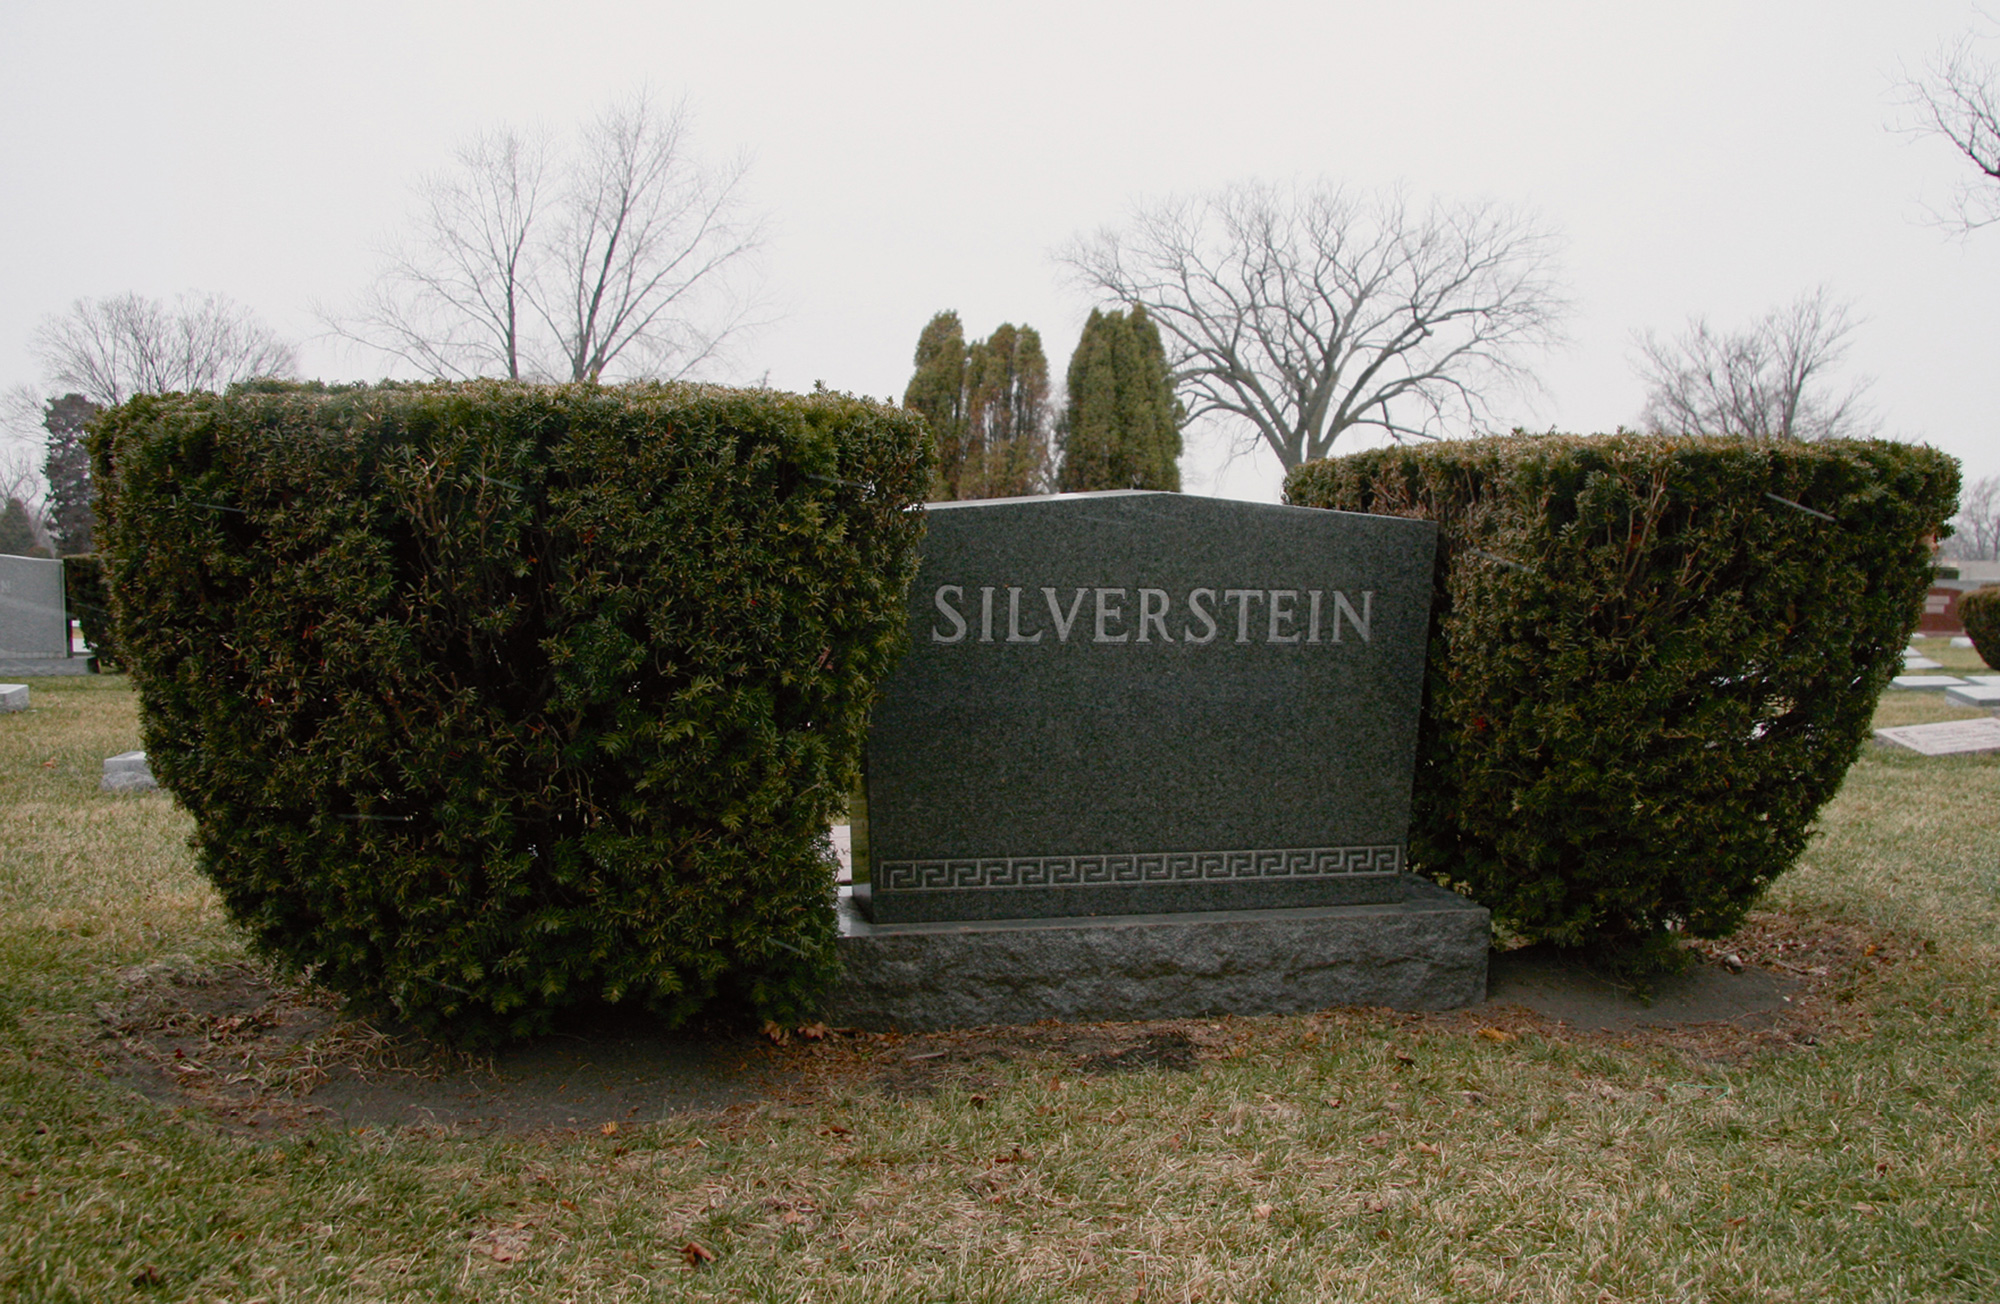 In Chicago’s Westlawn Cemetery, Silverstein returns the favor. Photo Dan Price.